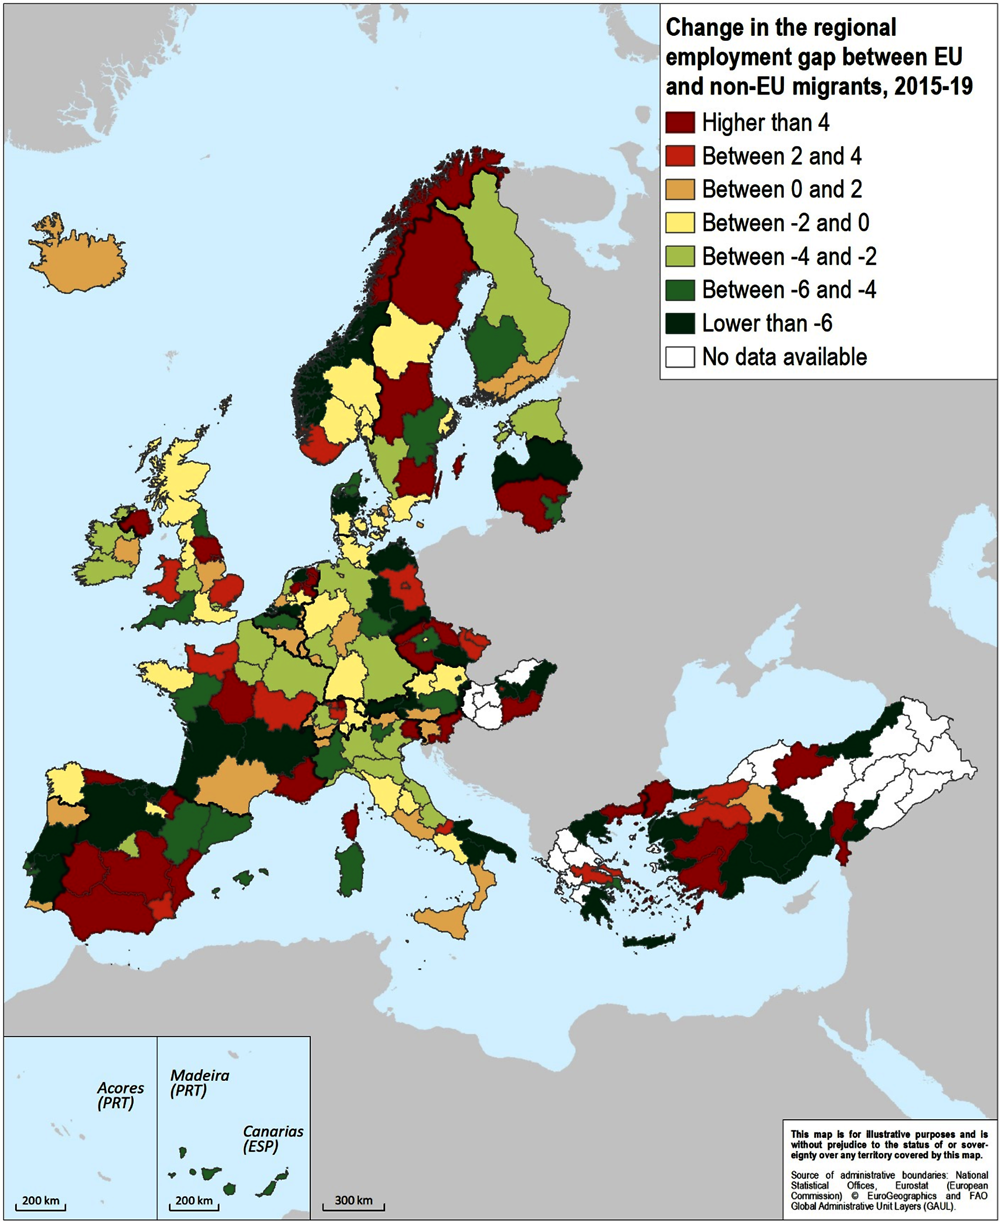 Figure 2.11. Change in the regional employment gap between EU and non-EU migrants, 2015-19